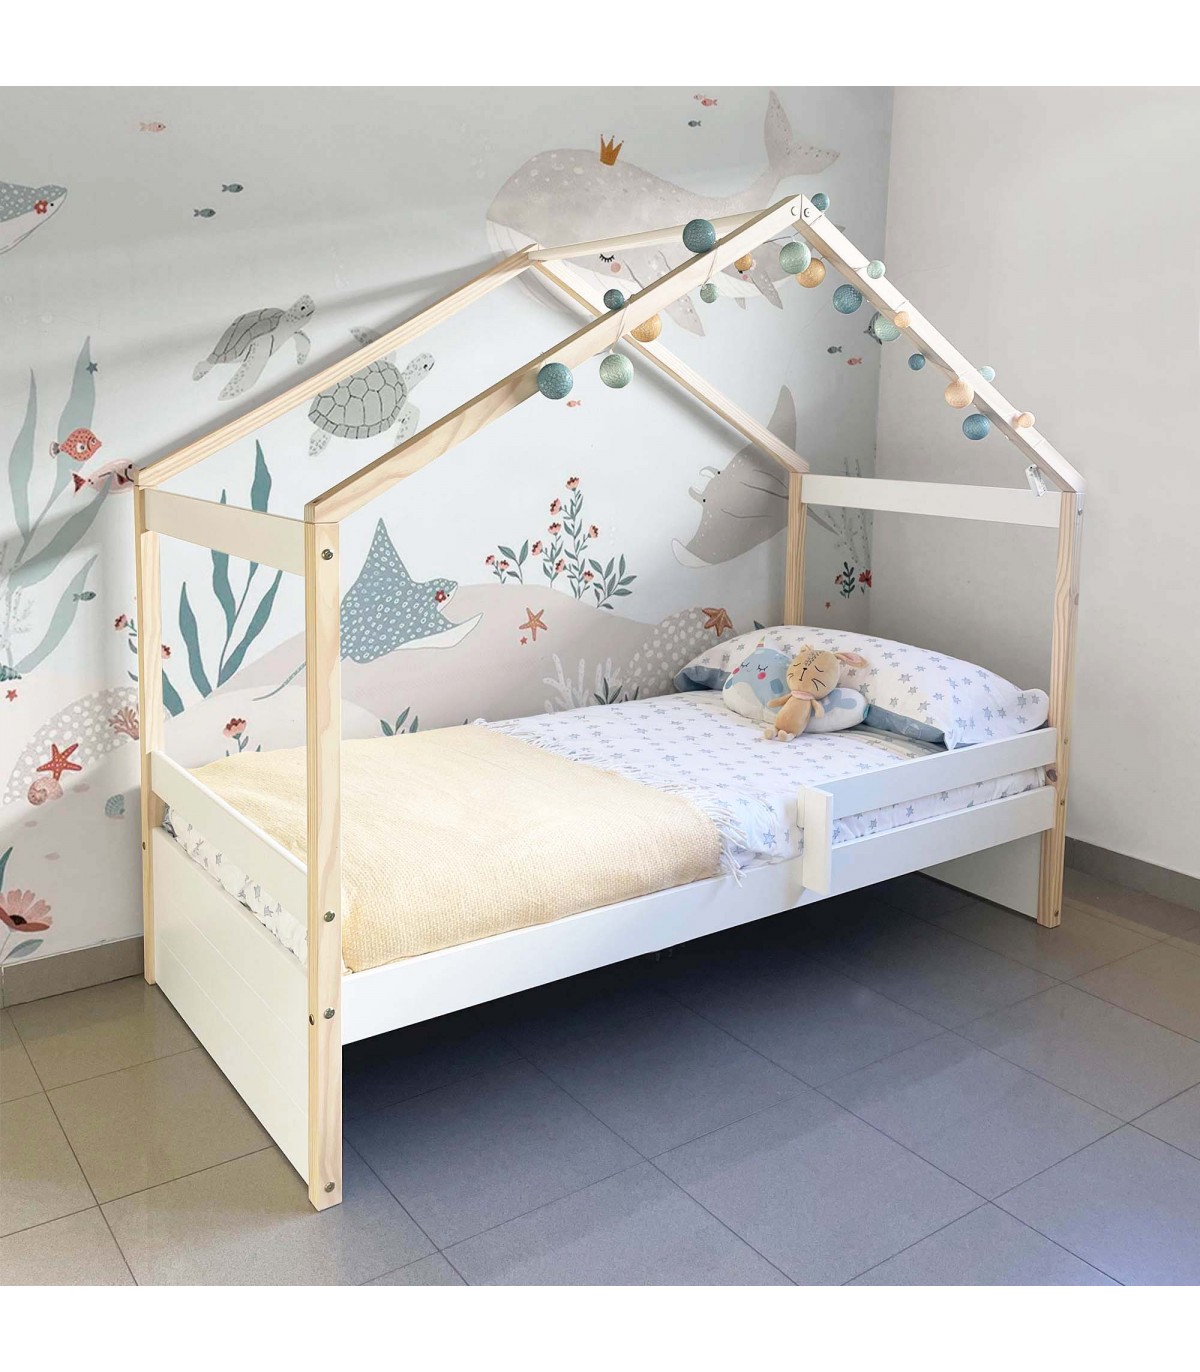 Buy Cama Infantil Montessori casita con barandilla